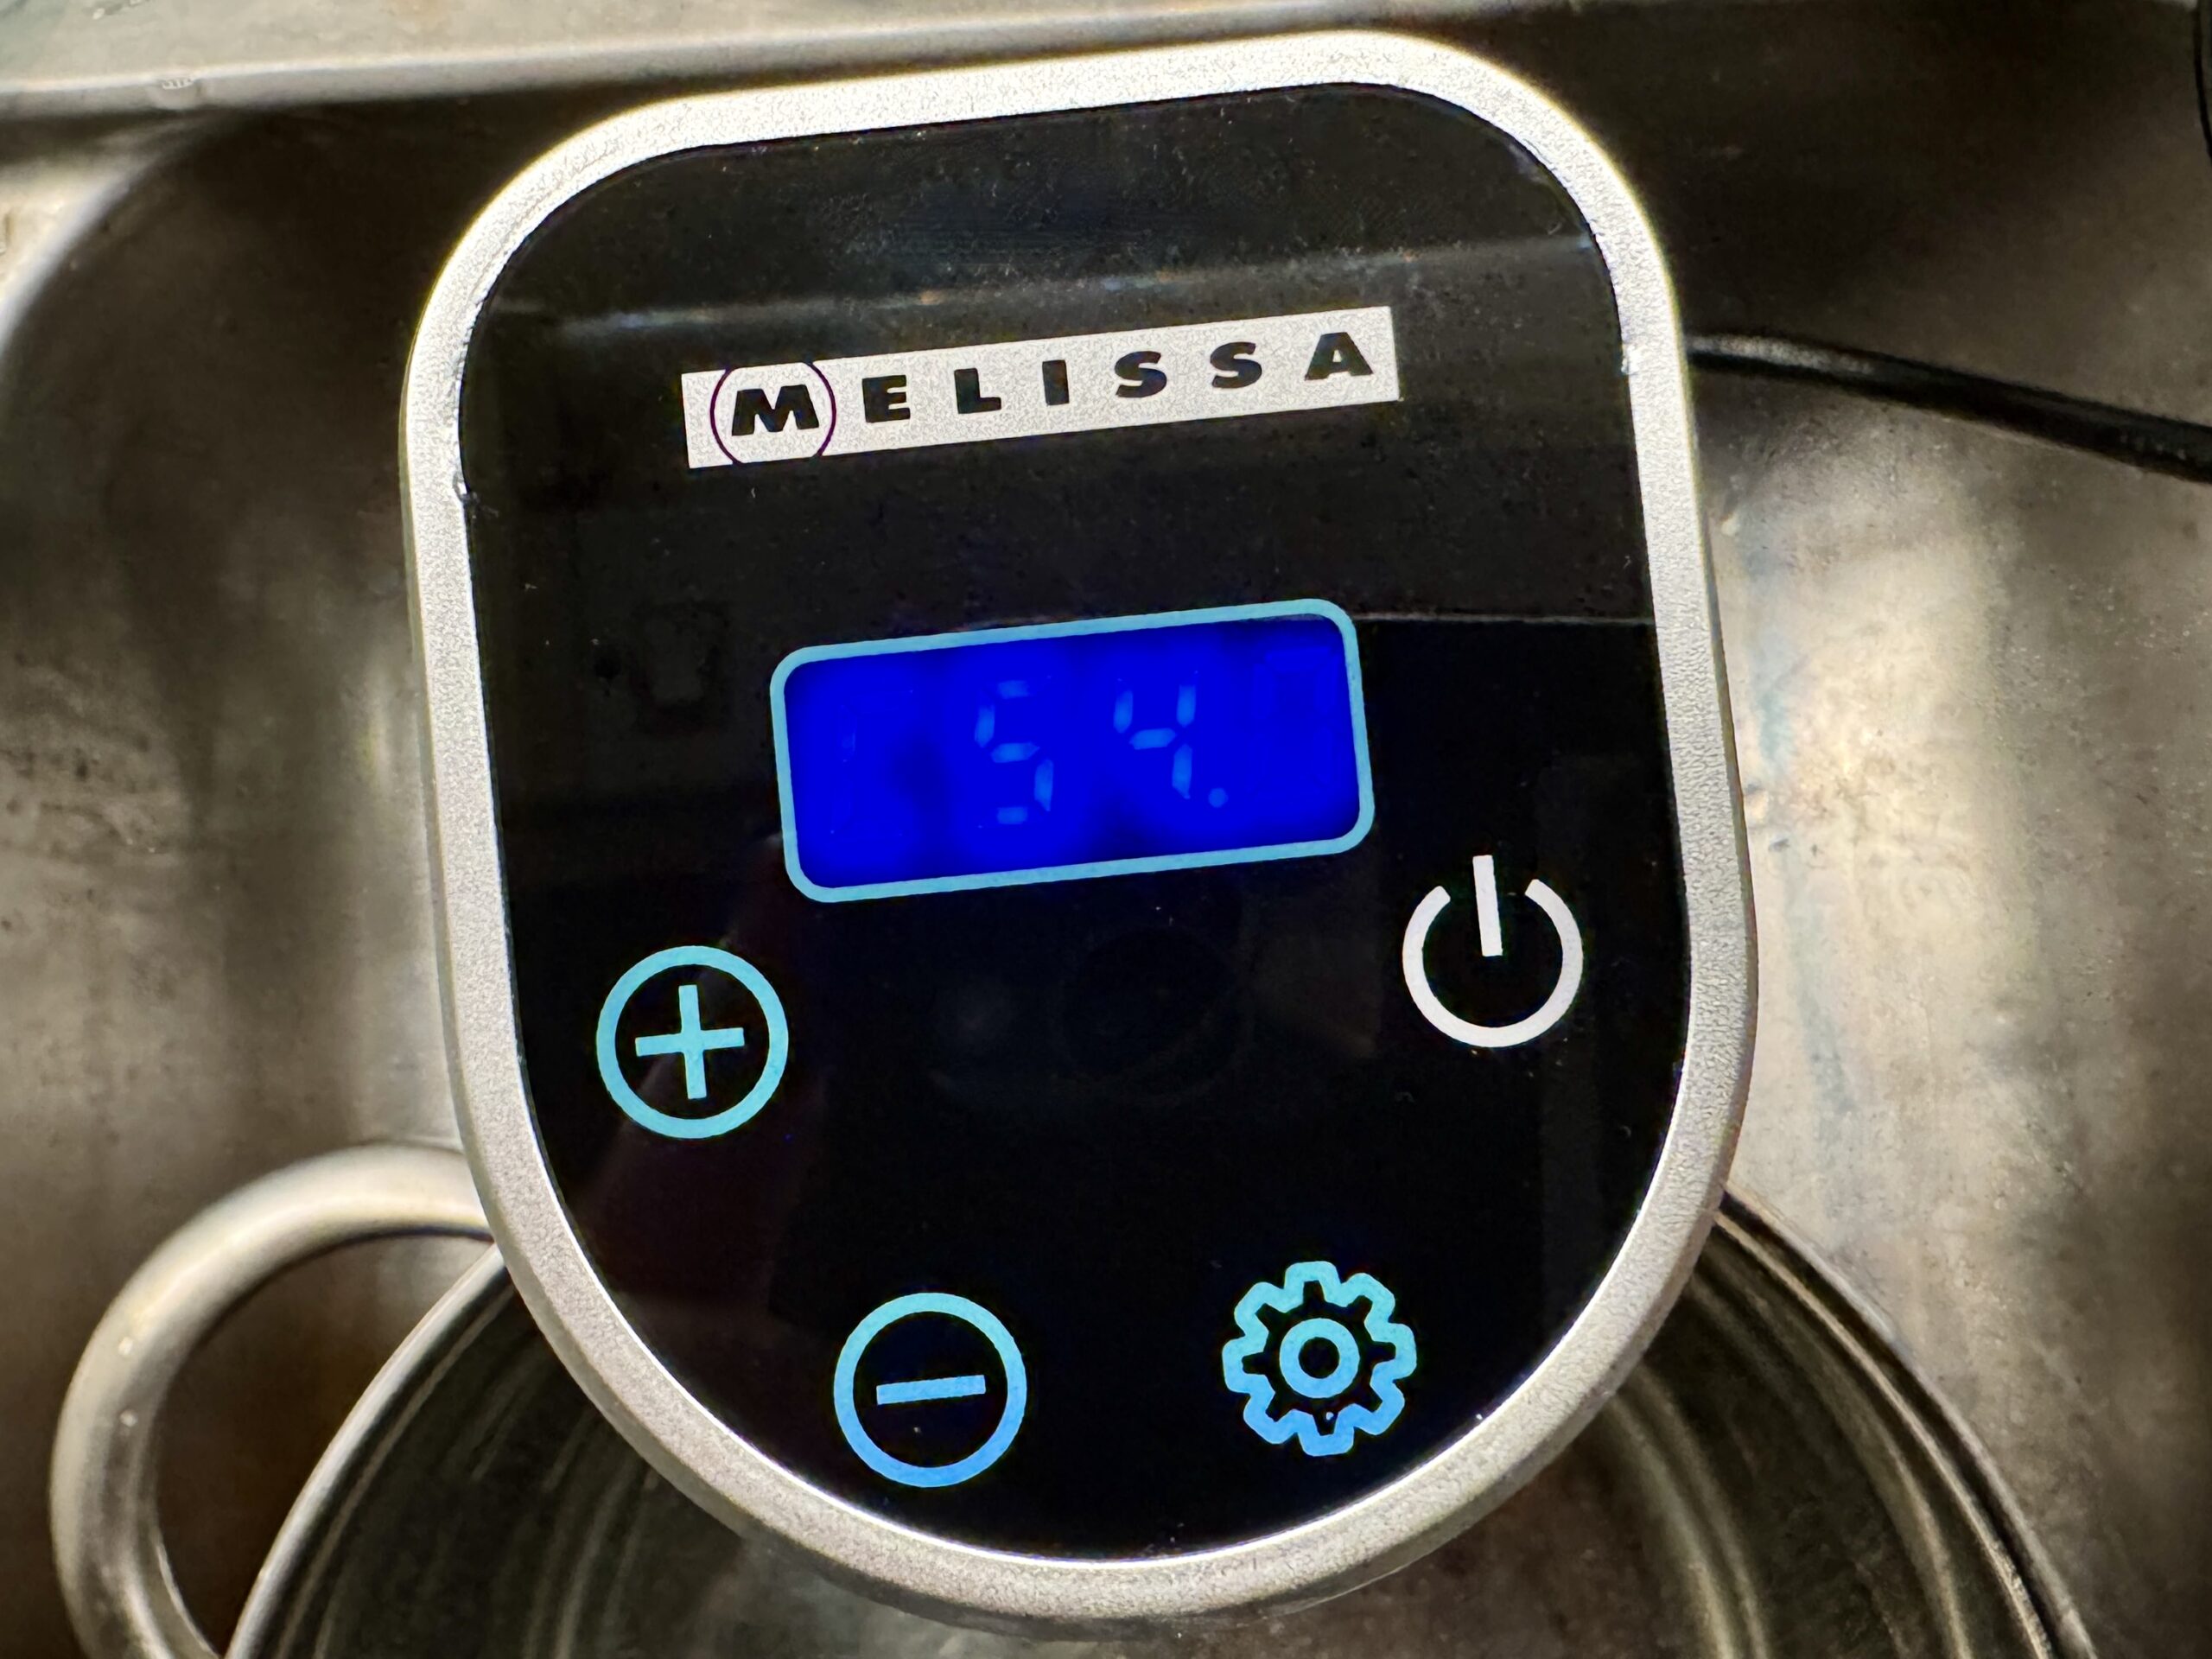 melissa display scaled